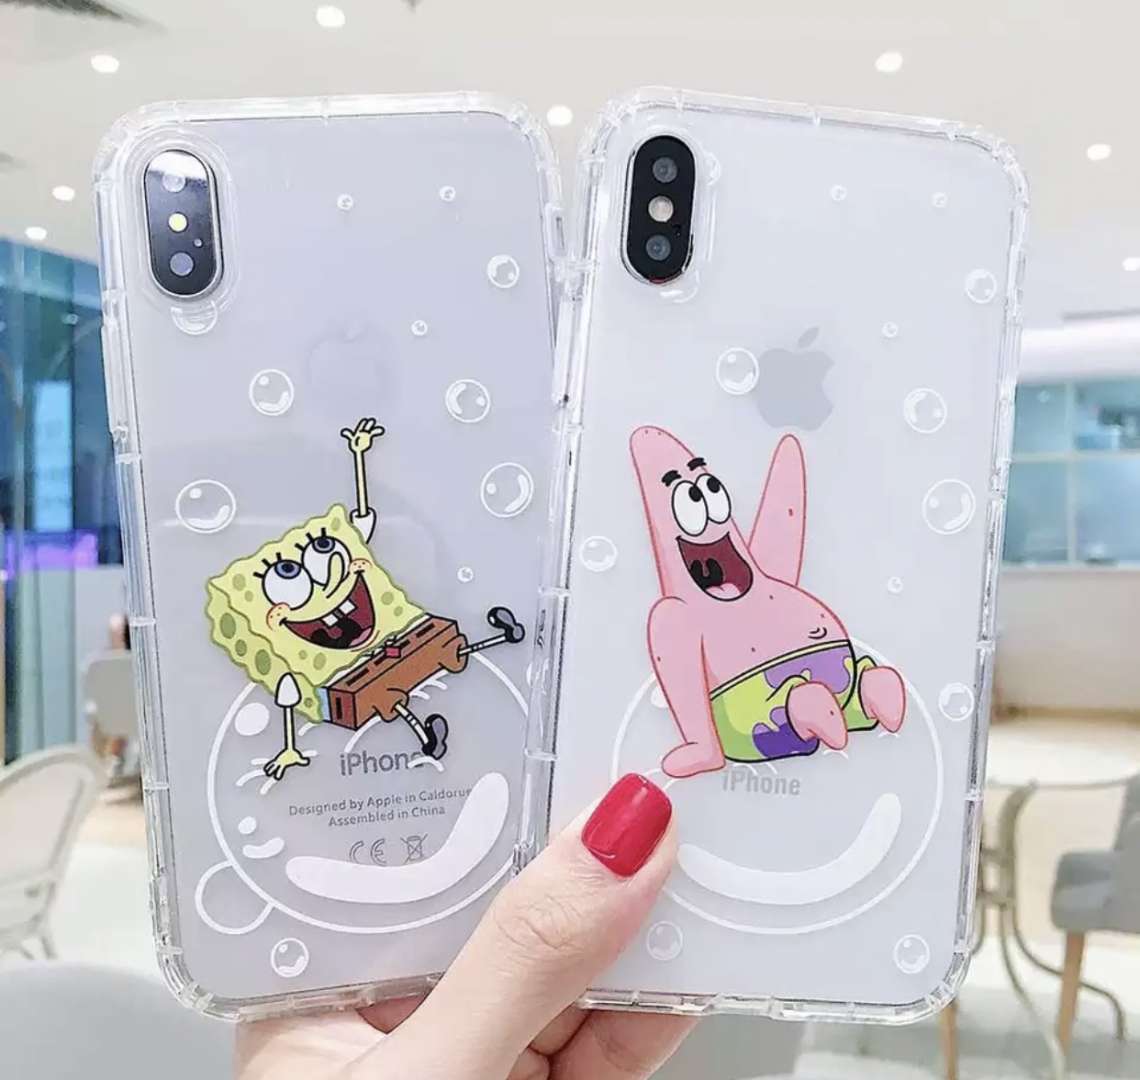 Spongebob newest models